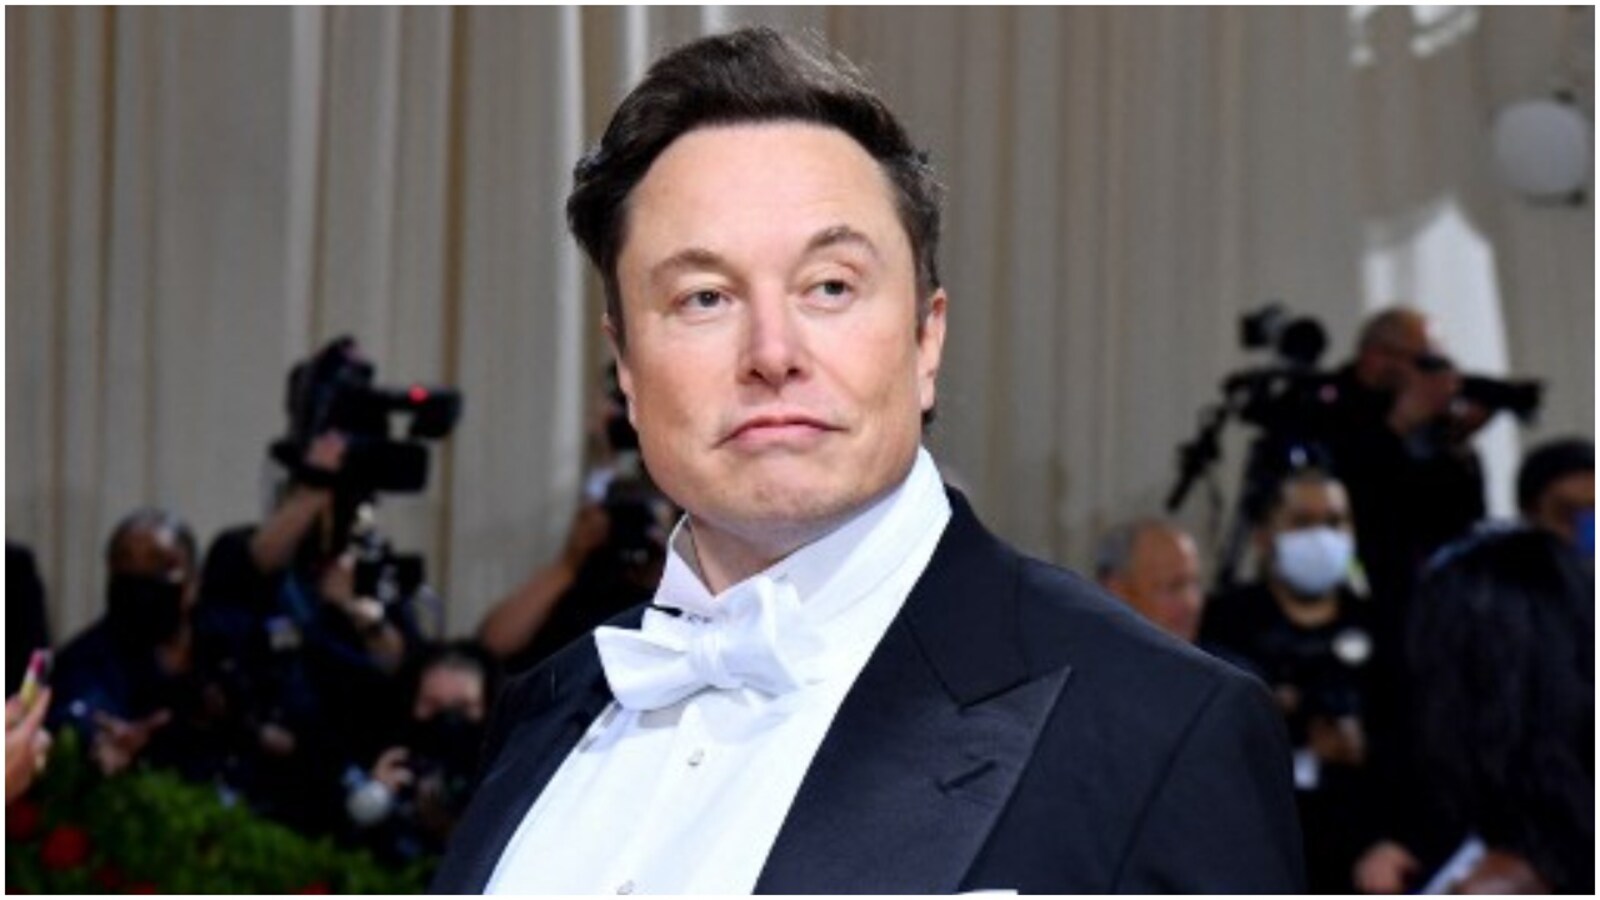 Elon Musk loses world's richest man title to Louis Vuitton owner